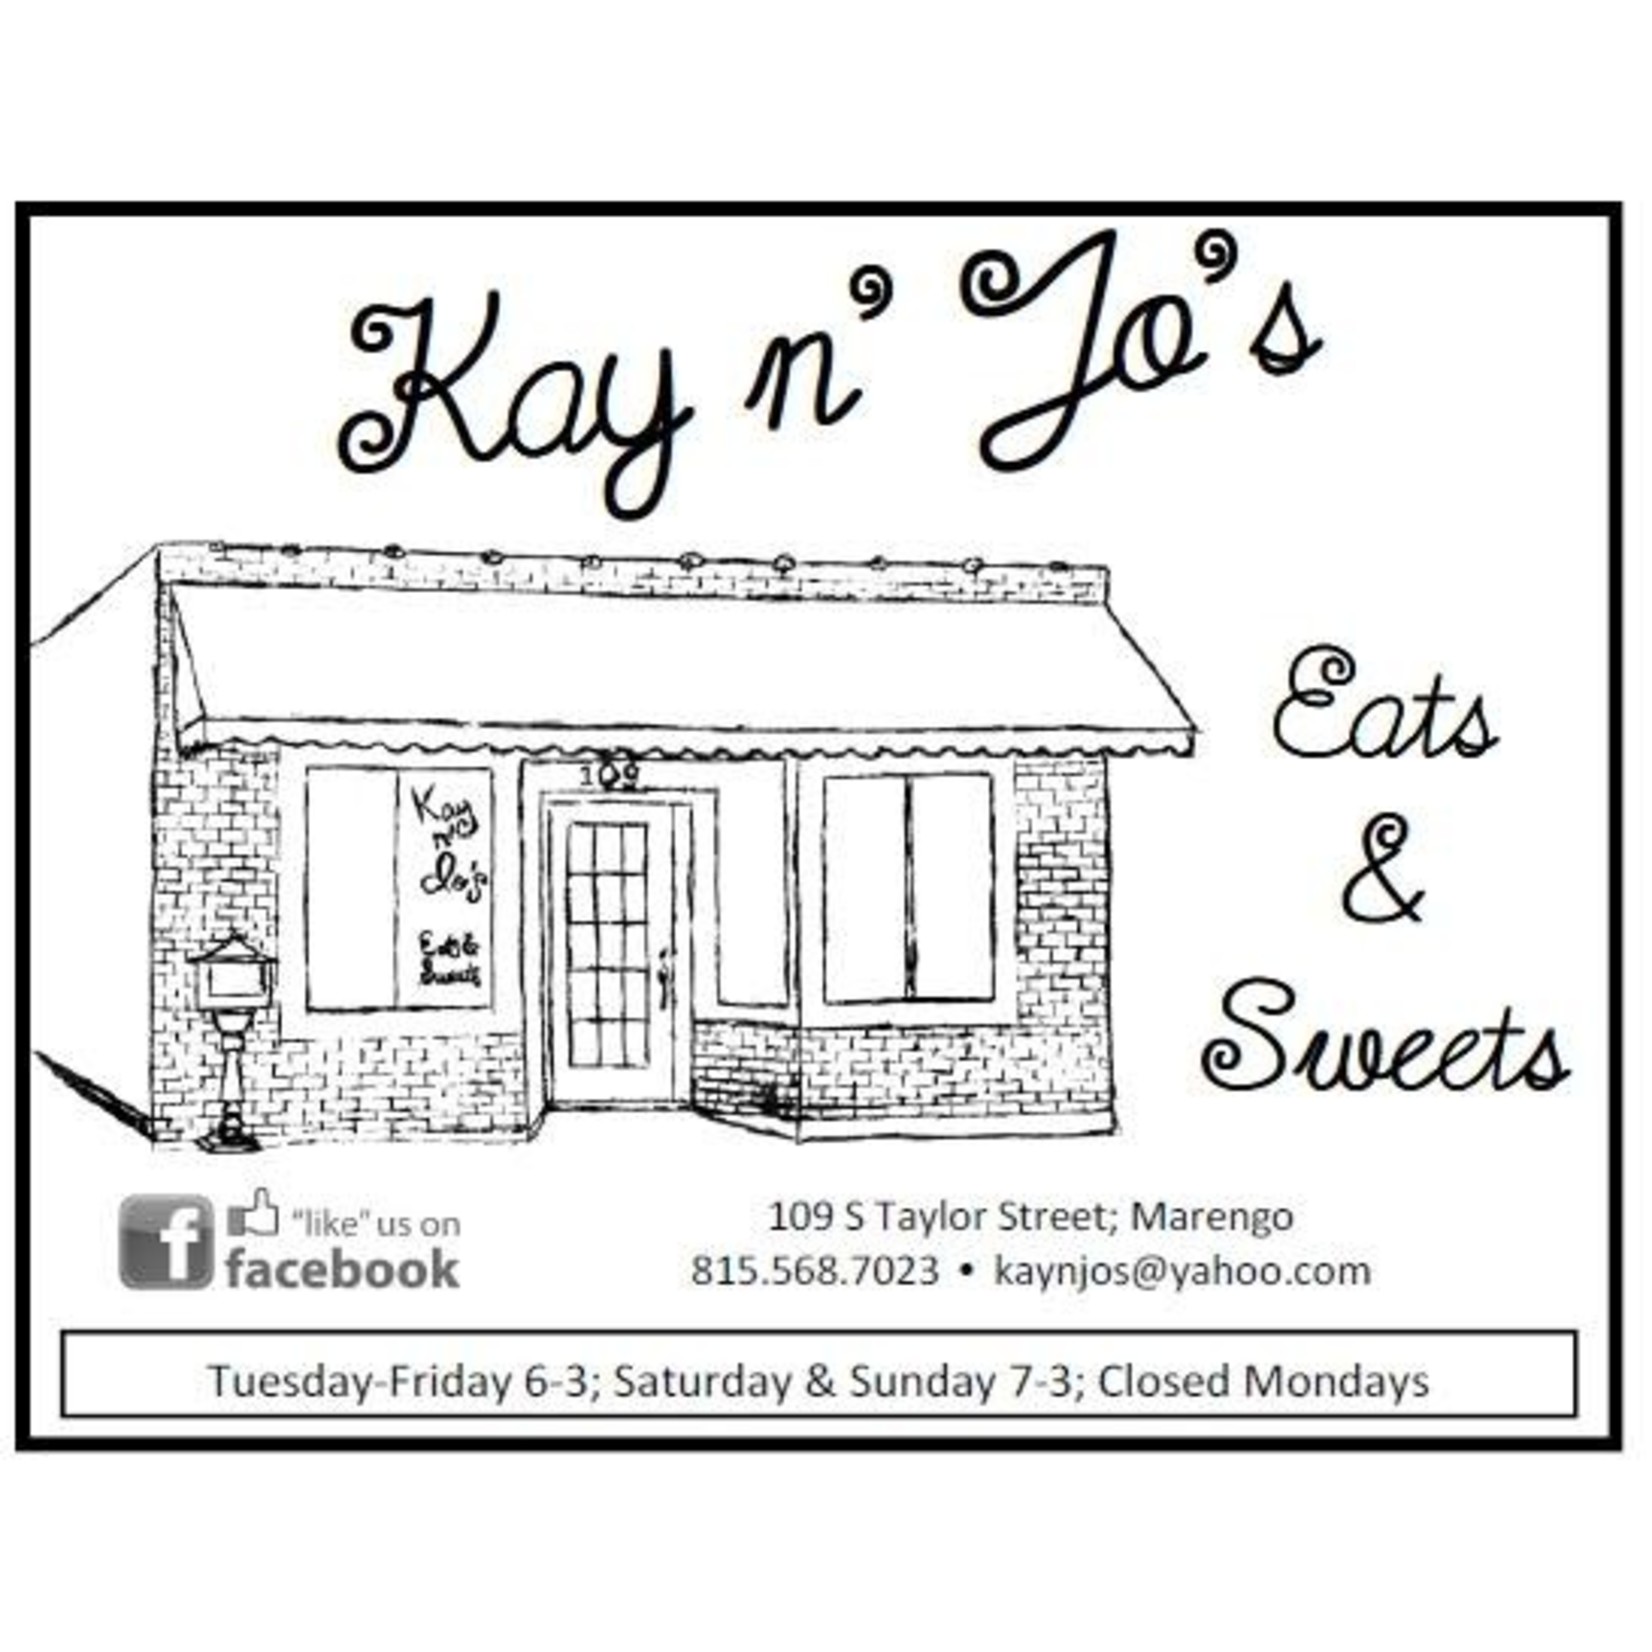 Kay ‘n’ Jo’s Eats and Sweets-Marengo Kay ‘n’ Jo’s Eats and Sweets-Marengo $7.00 Dining certificate